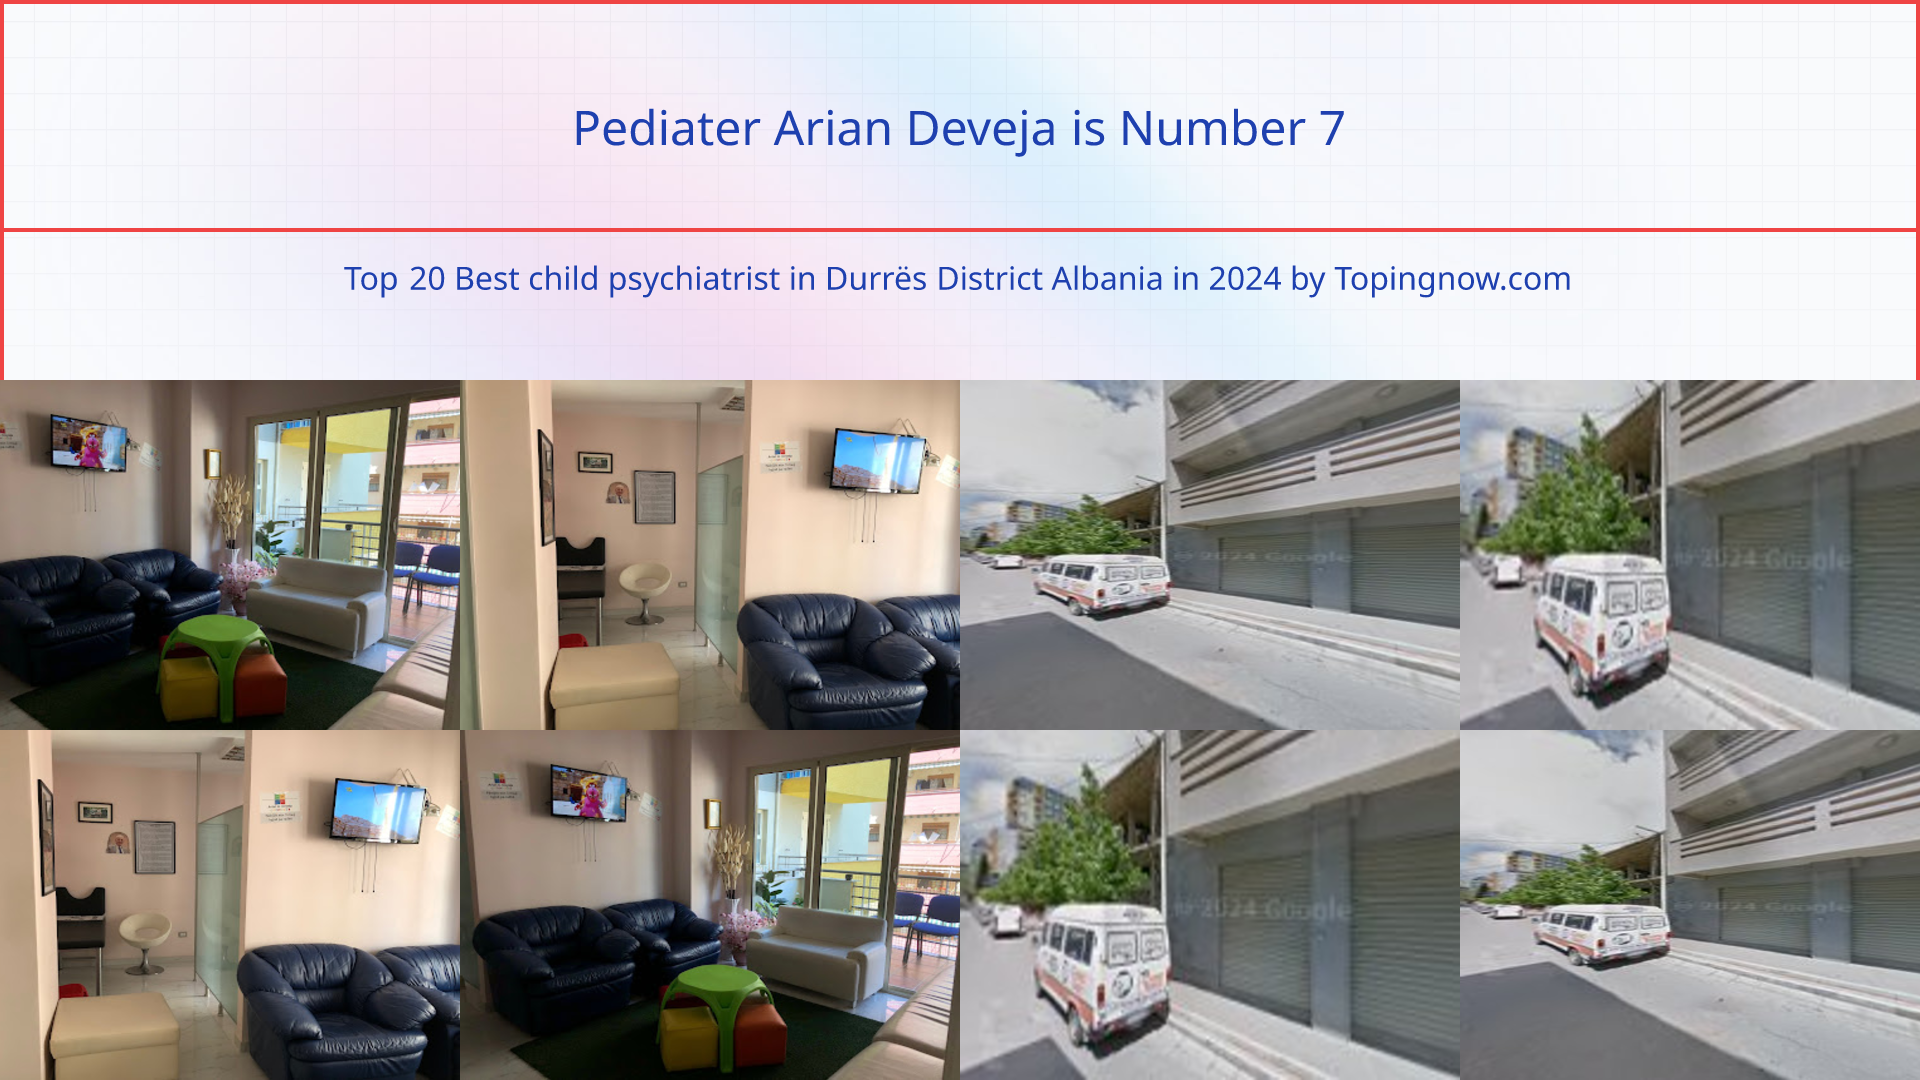 Pediater Arian Deveja: Top 20 Best child psychiatrist in Durrës District Albania in 2024